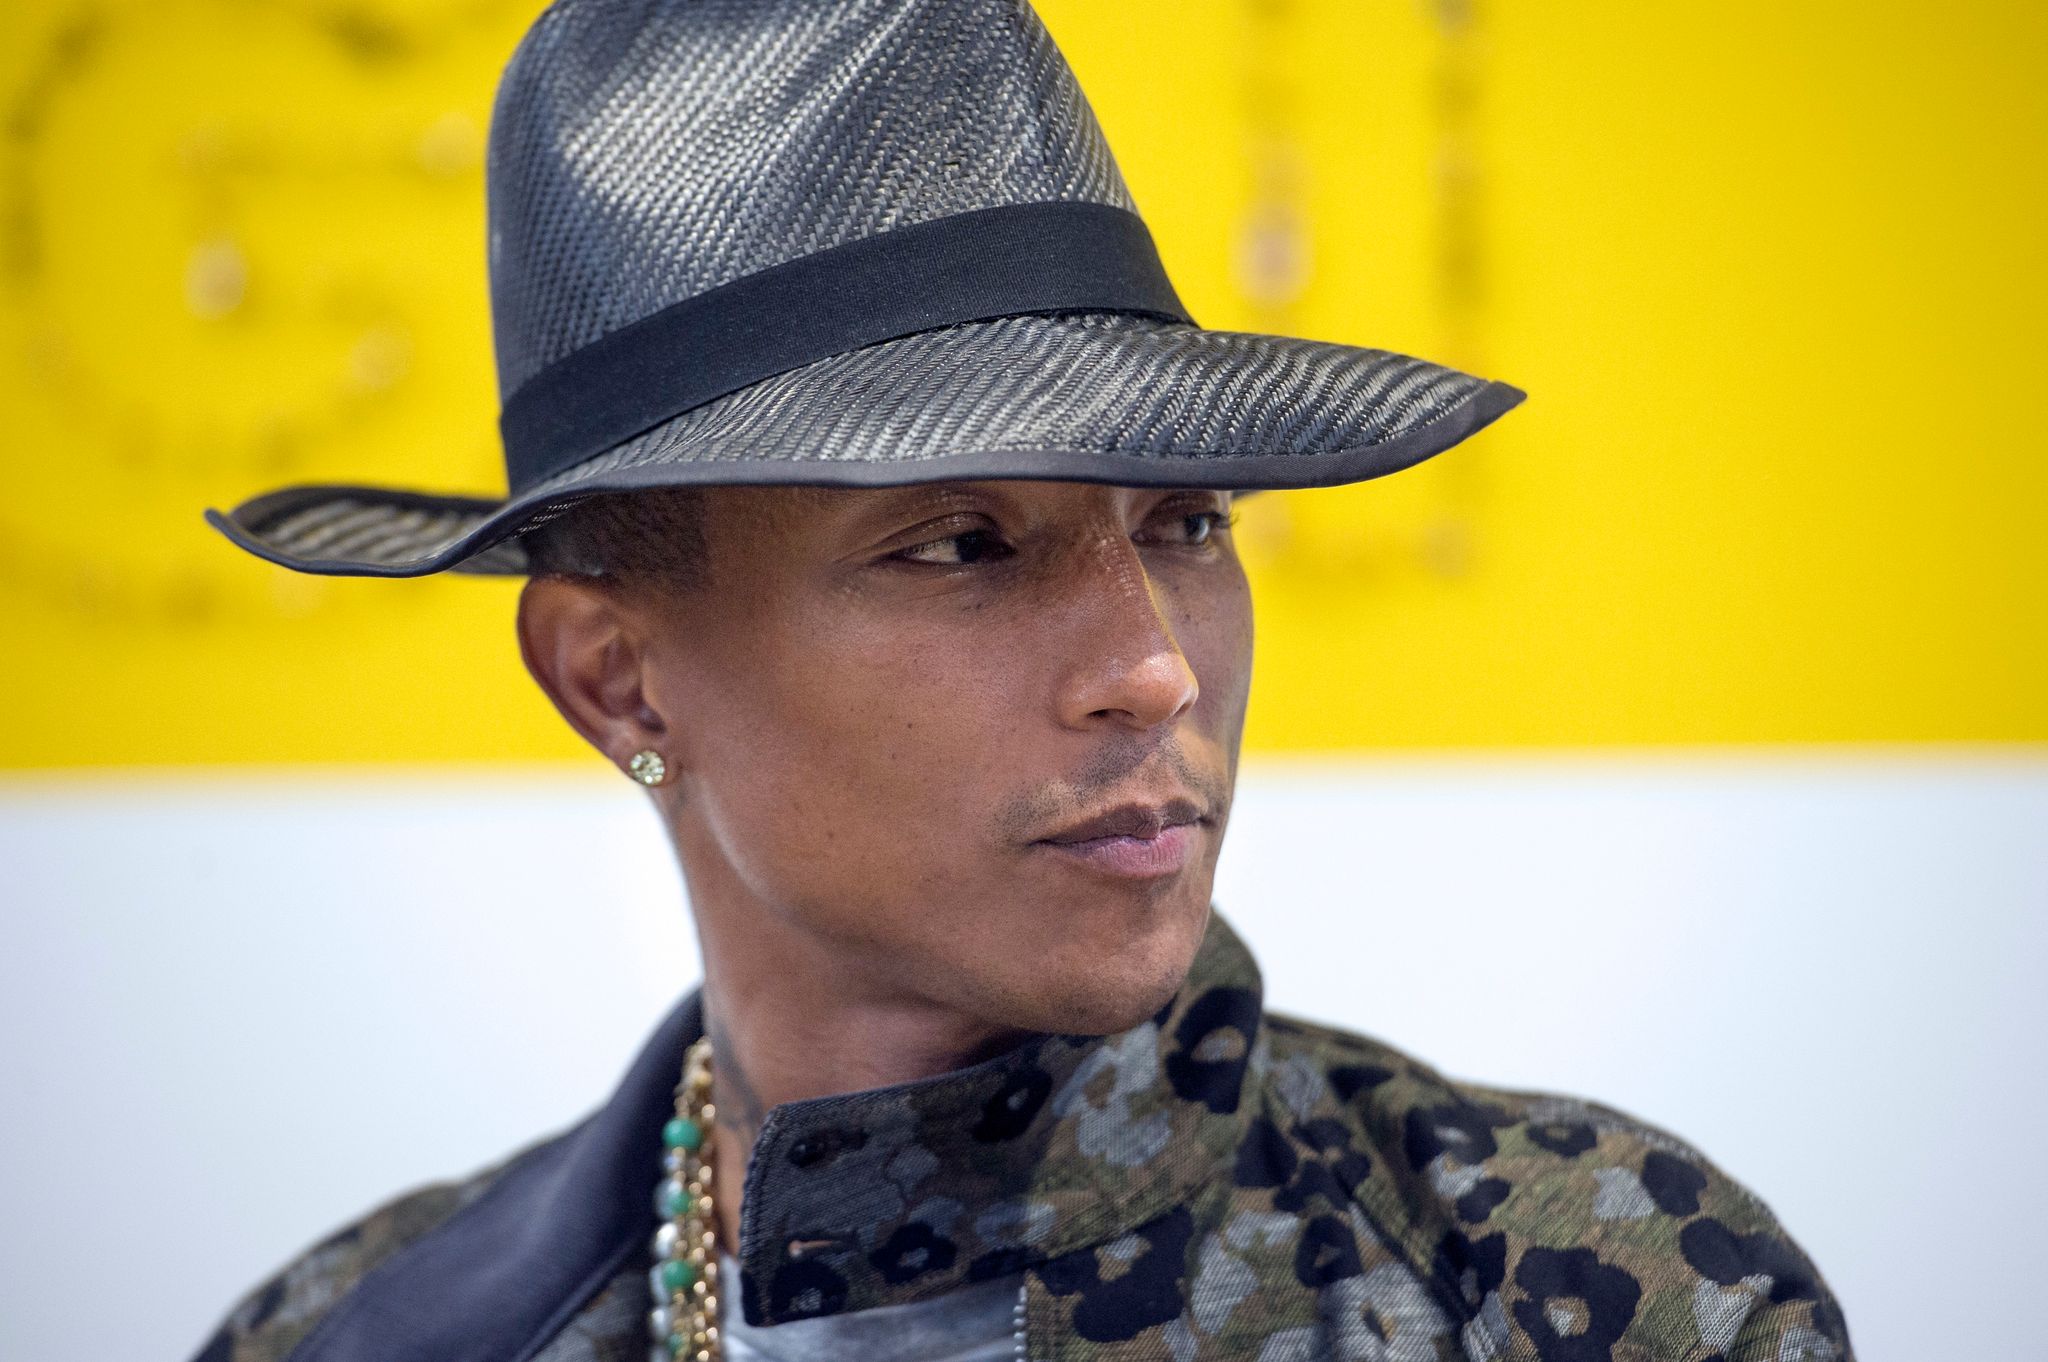 Pharrell Williams - La biographie de Pharrell Williams avec